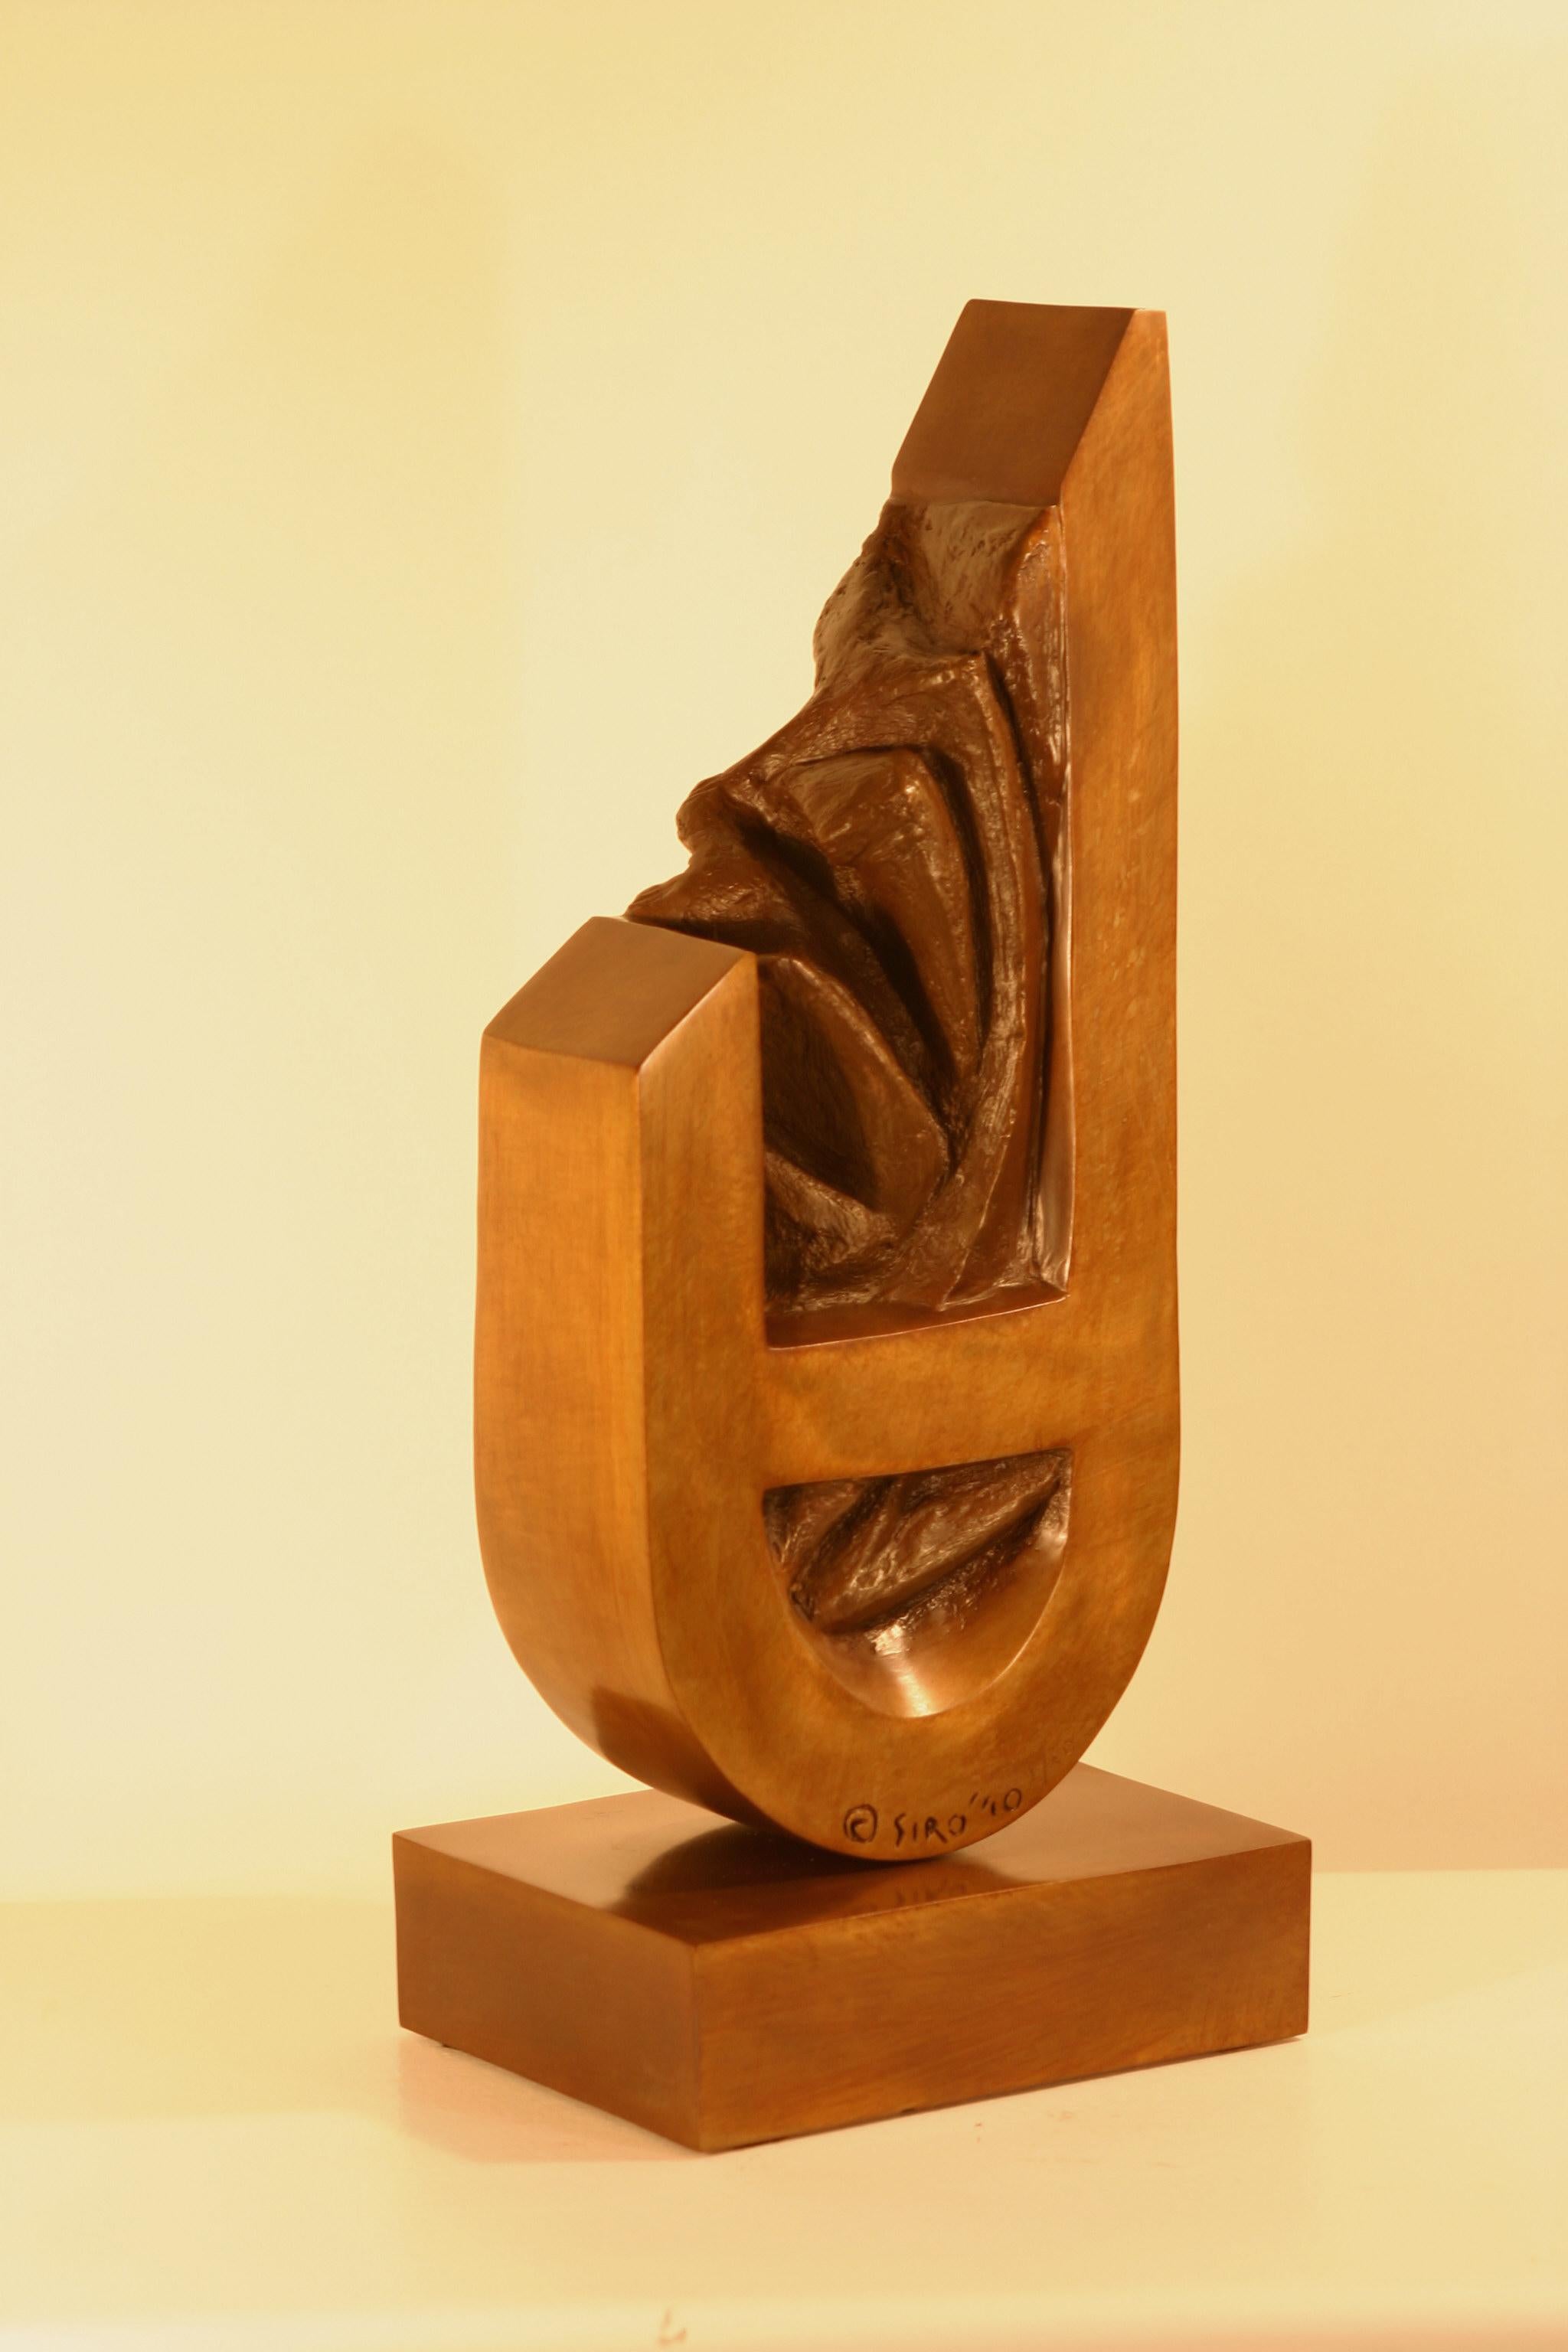 Siro' Abstract Sculpture - Tierra Nueva